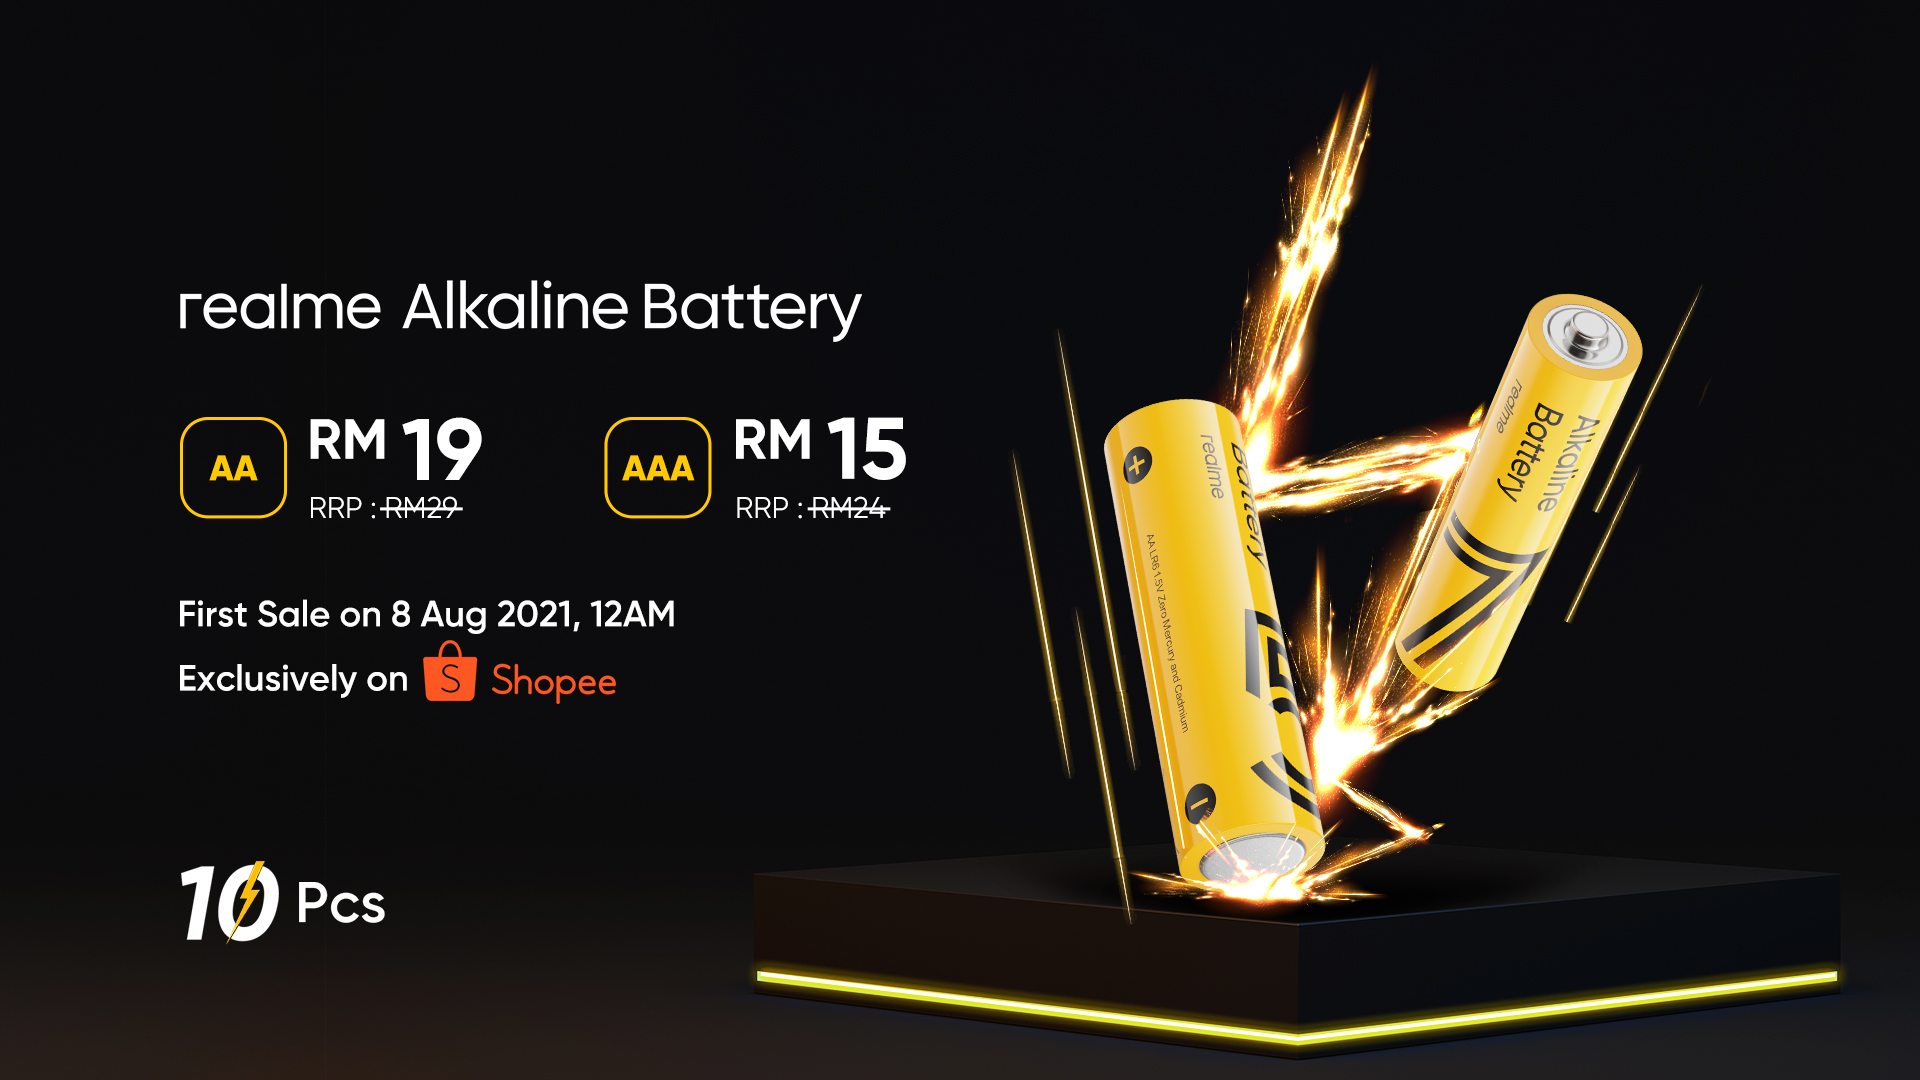 realme Alkaline Battery First Sale on Shopee